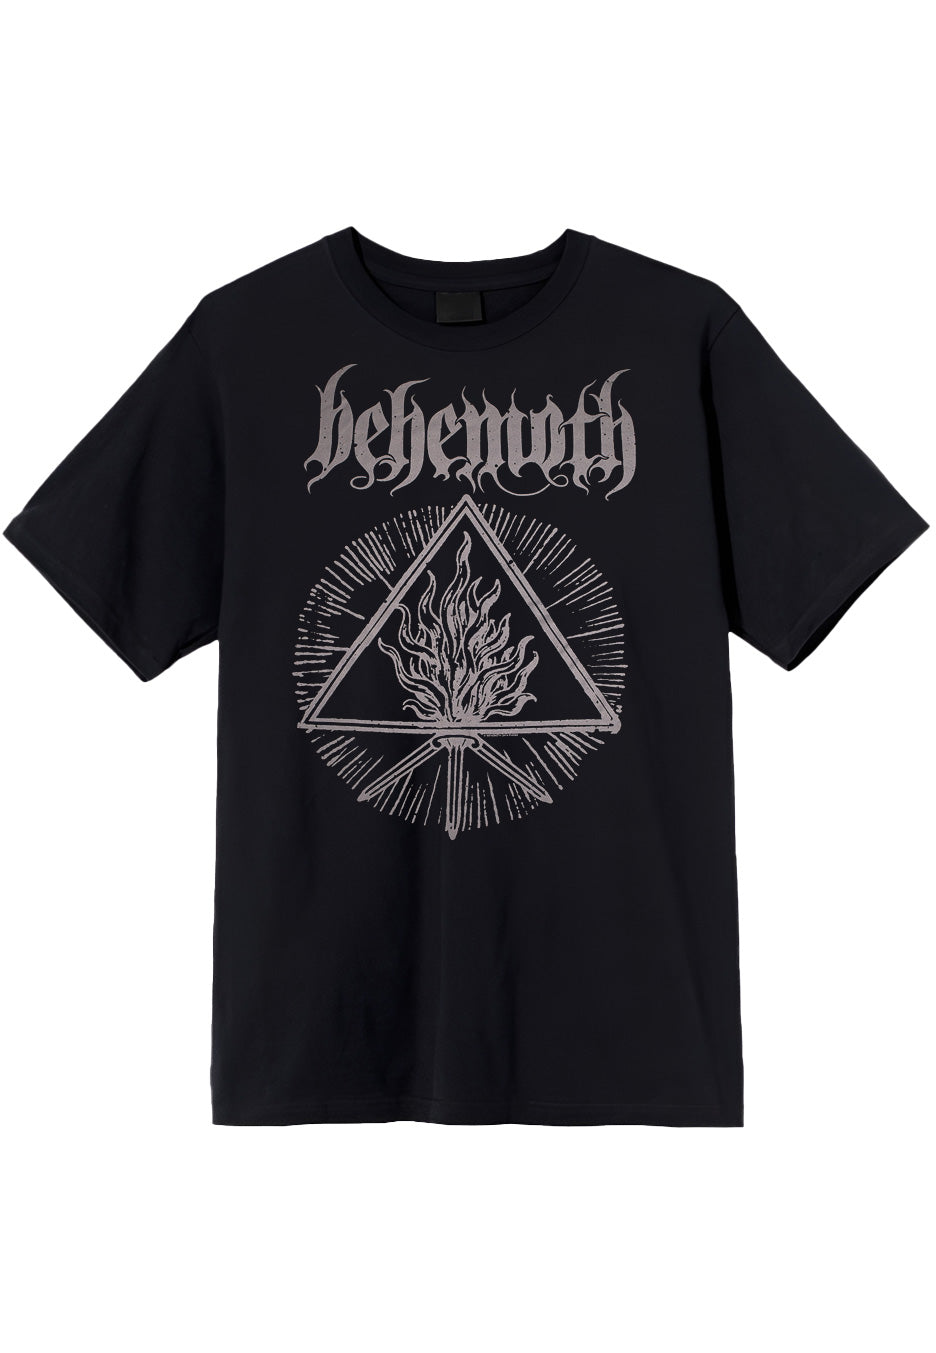 Behemoth - Furor Divinus - T-Shirt